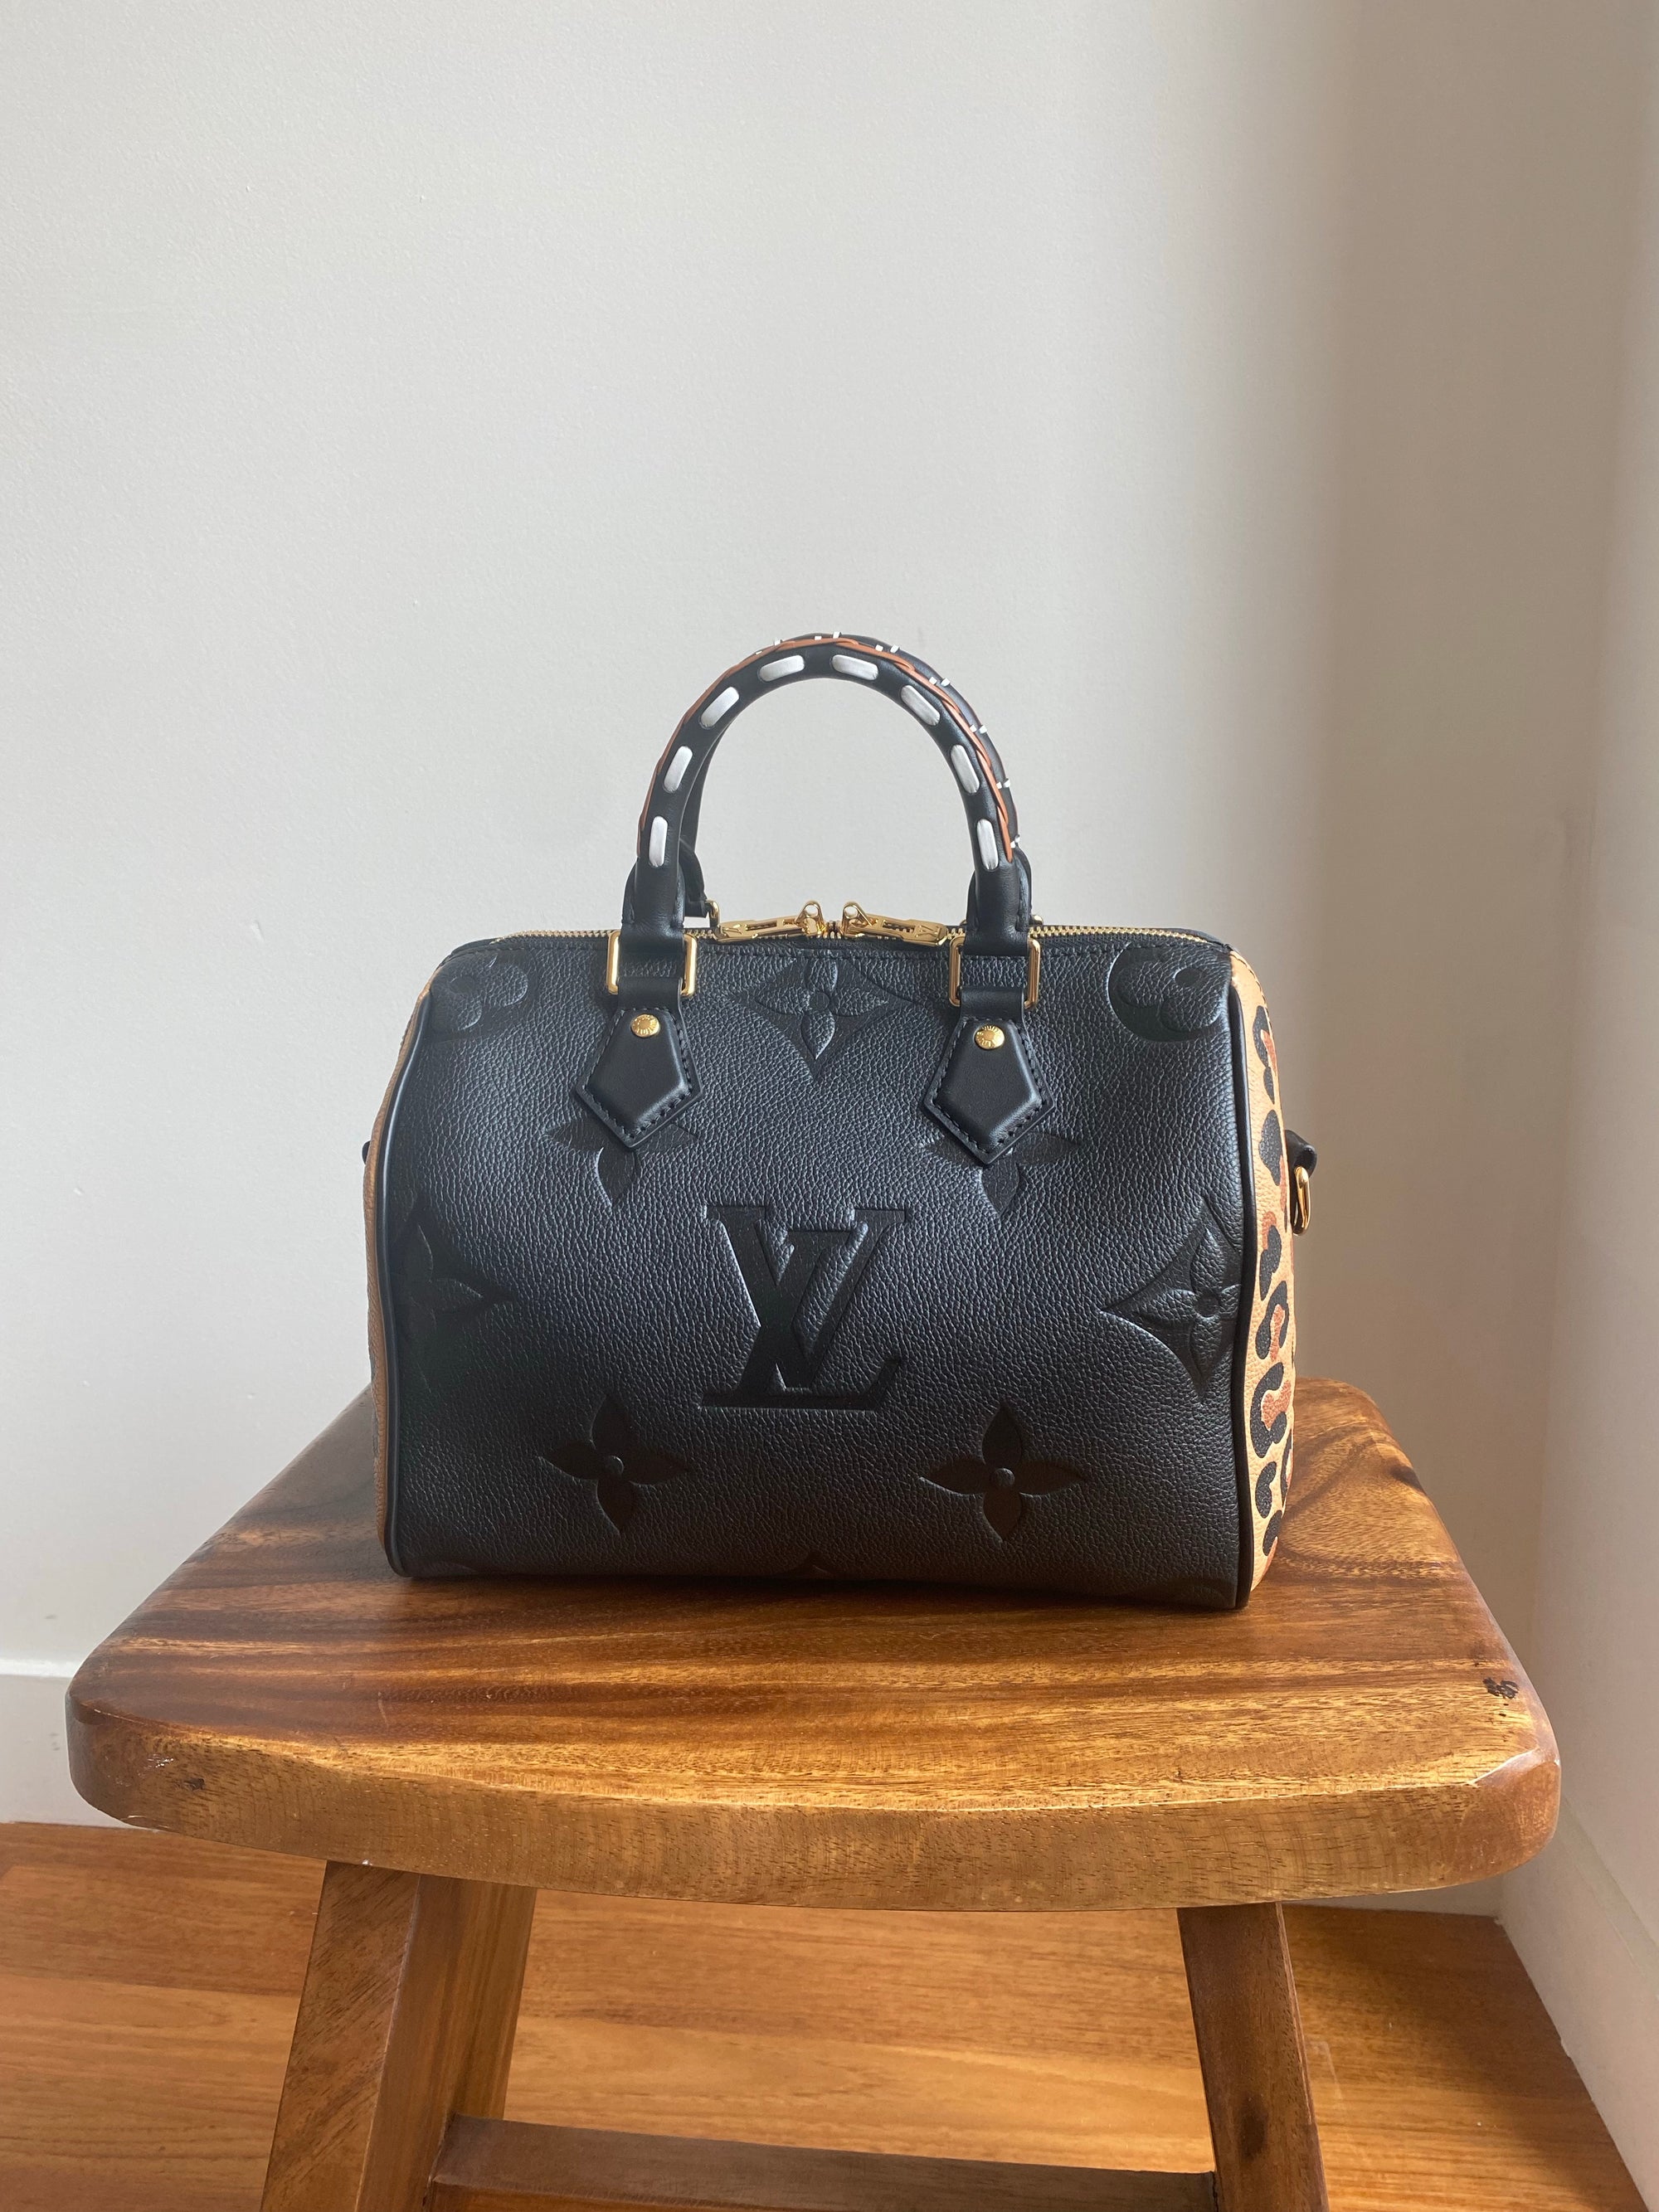 Louis Vuitton Wild At Heart Bag Collection